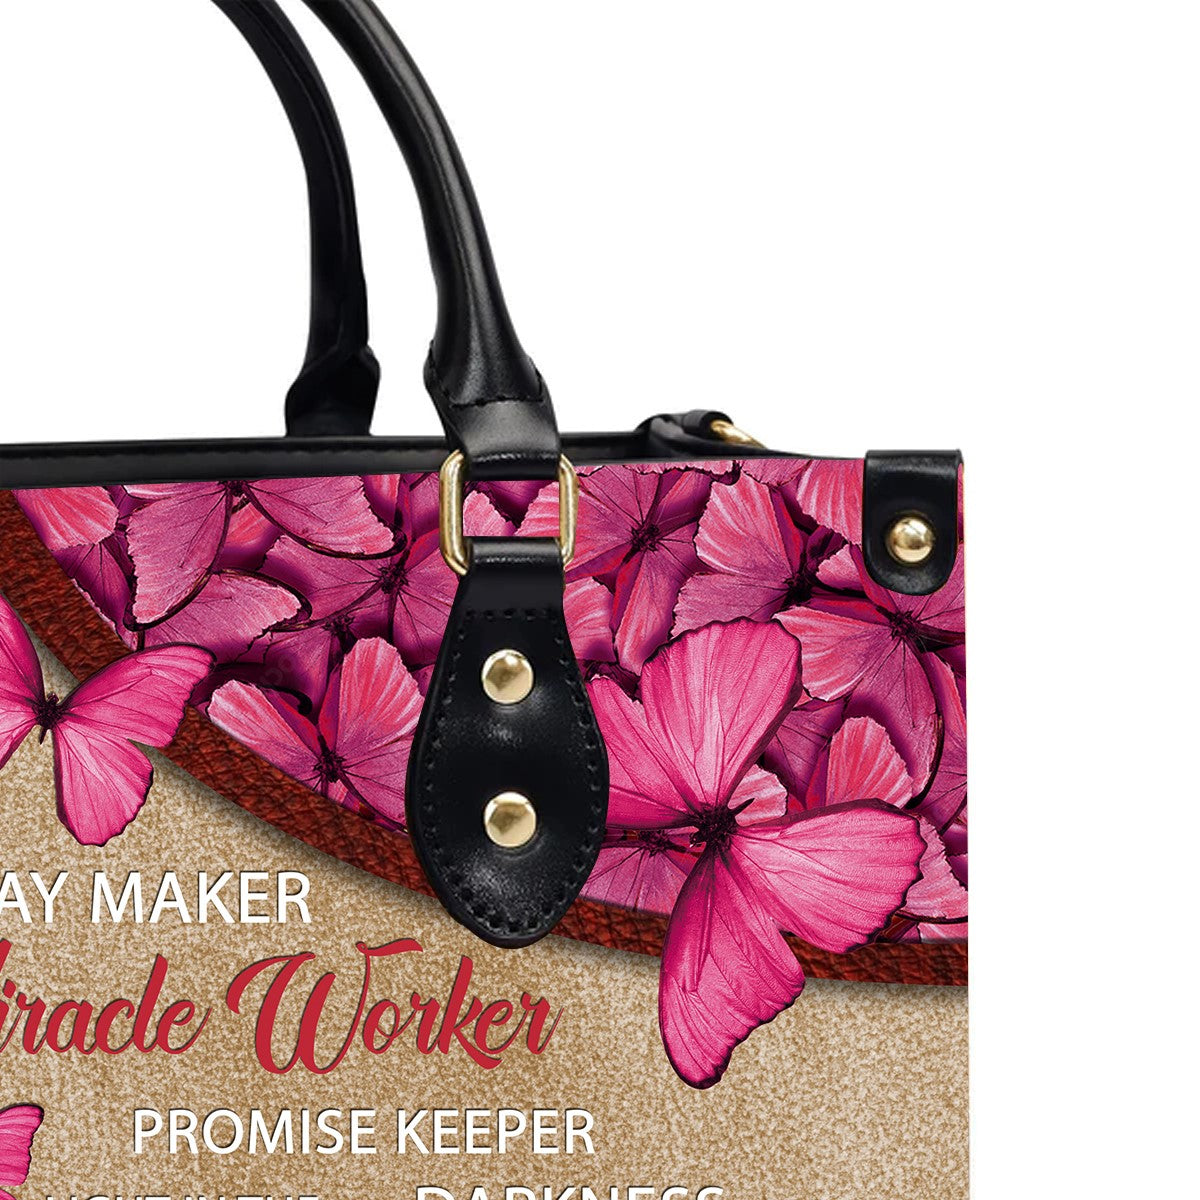 Christianartbag Handbags, Way Maker Miracle Worker Leather Handbag, Butterfly Pink Leather Handbag, Gifts for Women, CABLTB01311023. - Christian Art Bag